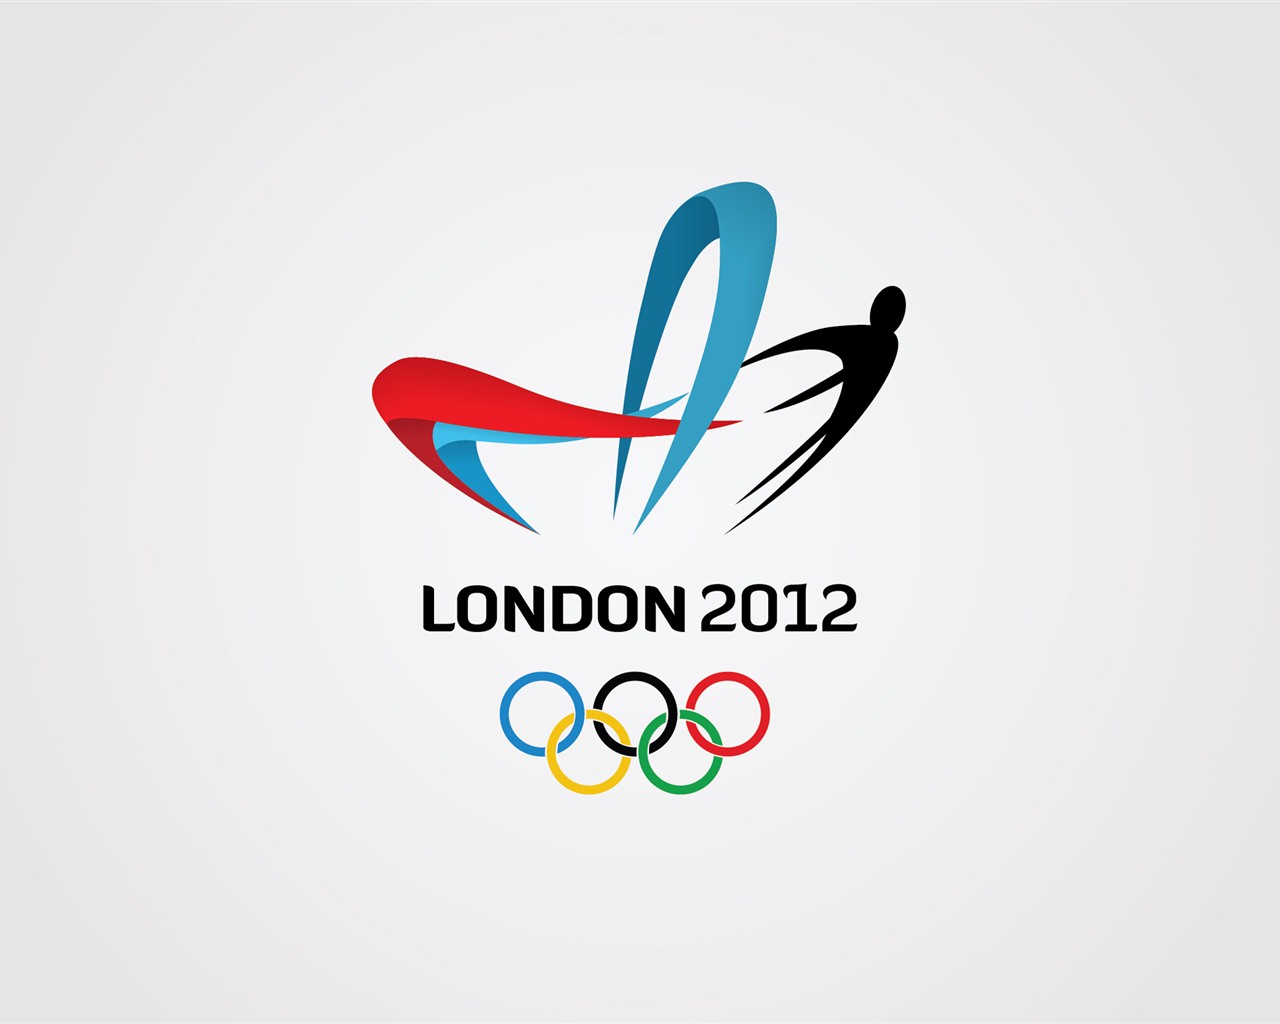 London 2012 Olympics theme wallpapers (2) #25 - 1280x1024